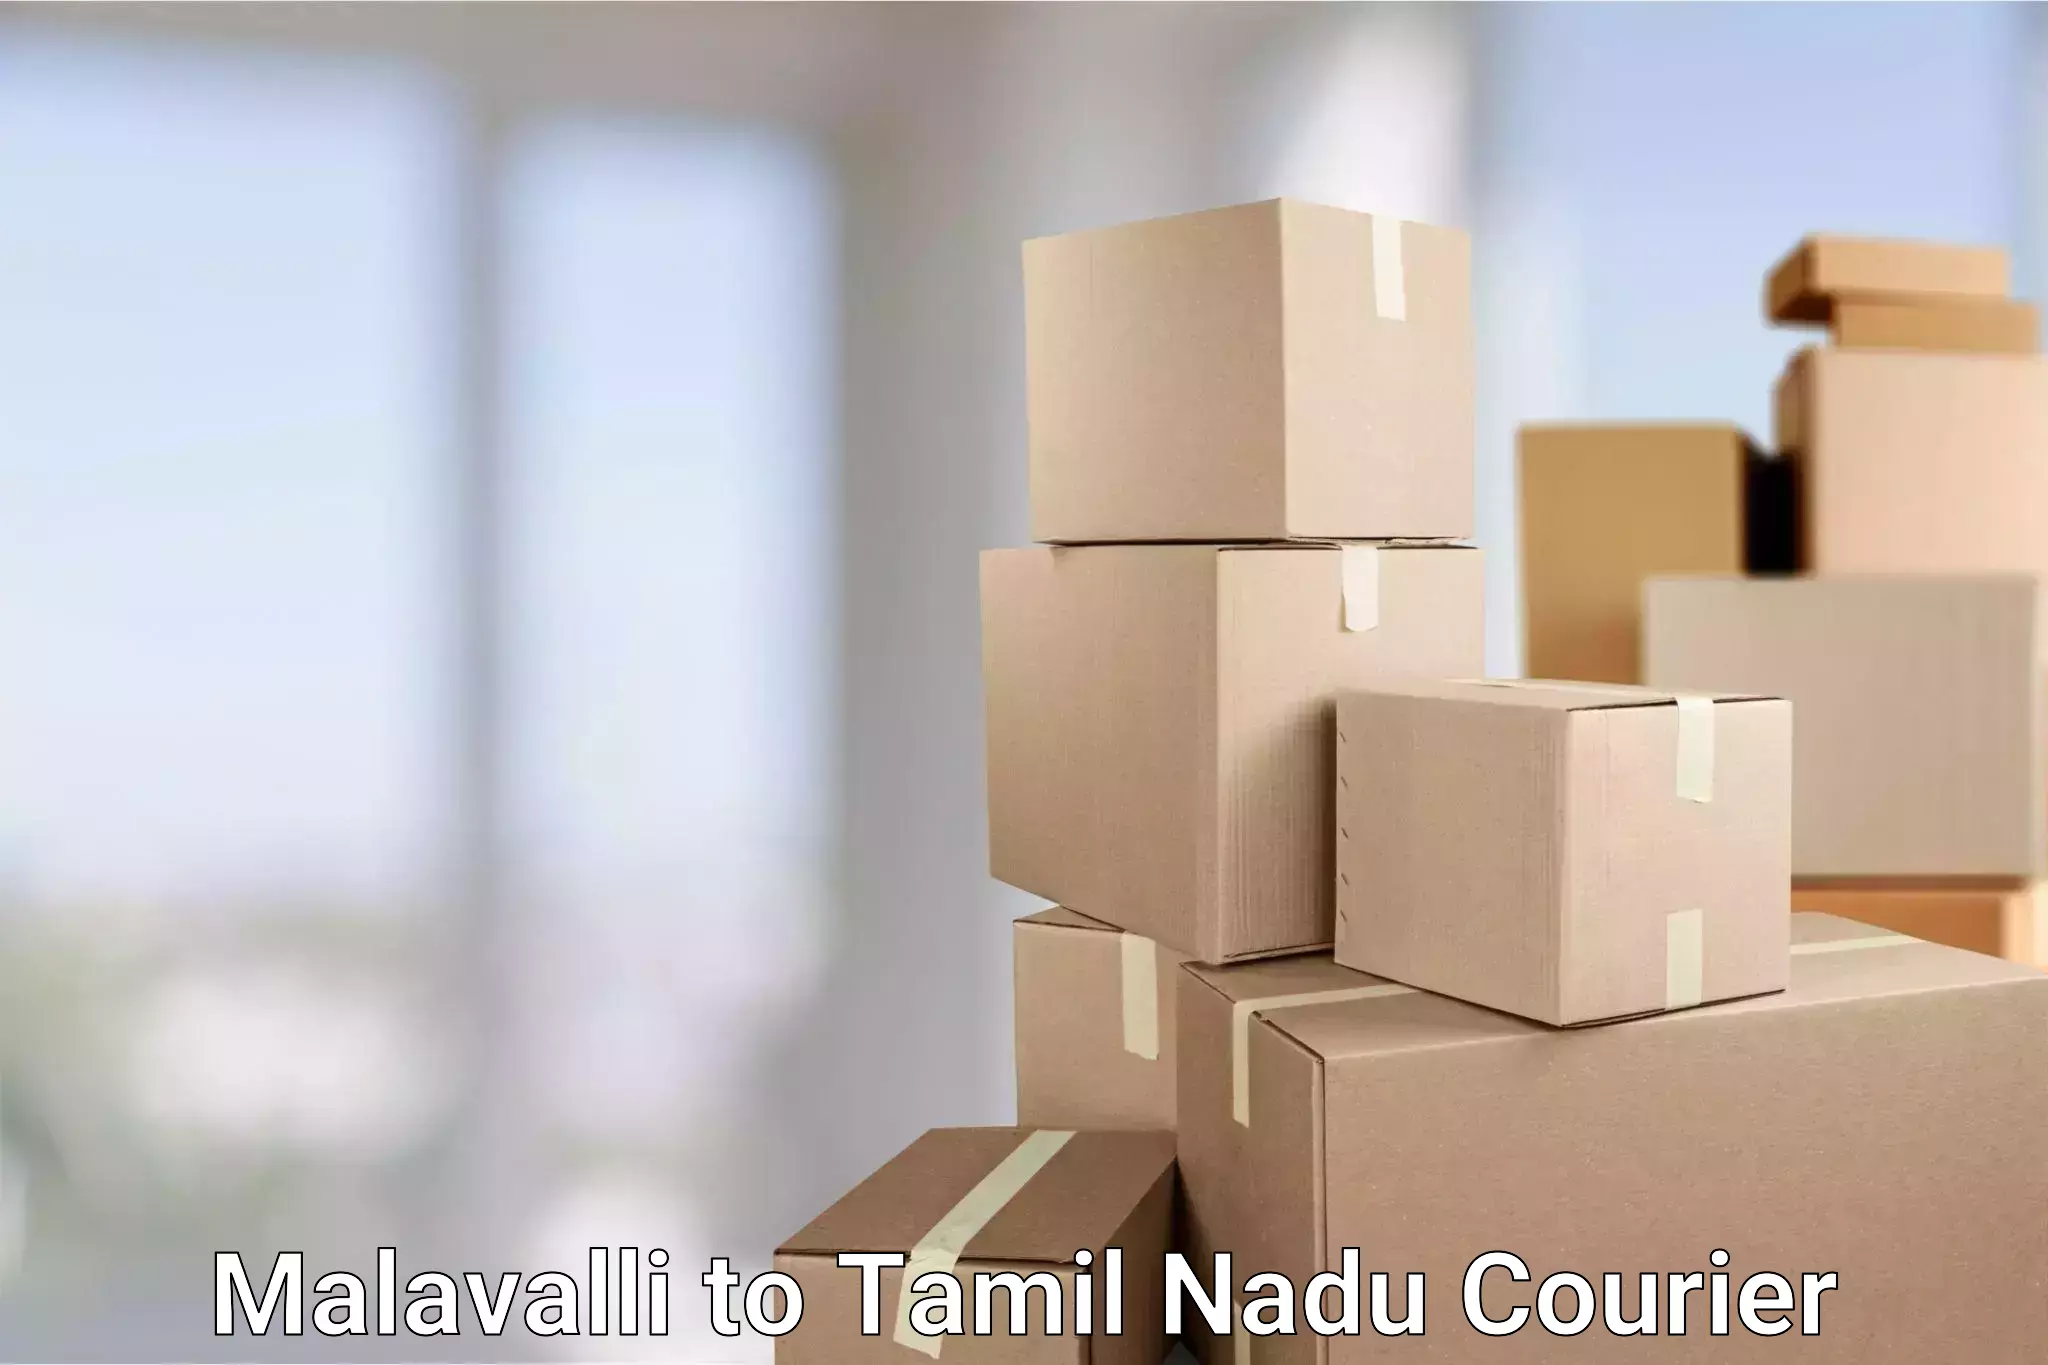 Doorstep delivery service Malavalli to Viluppuram